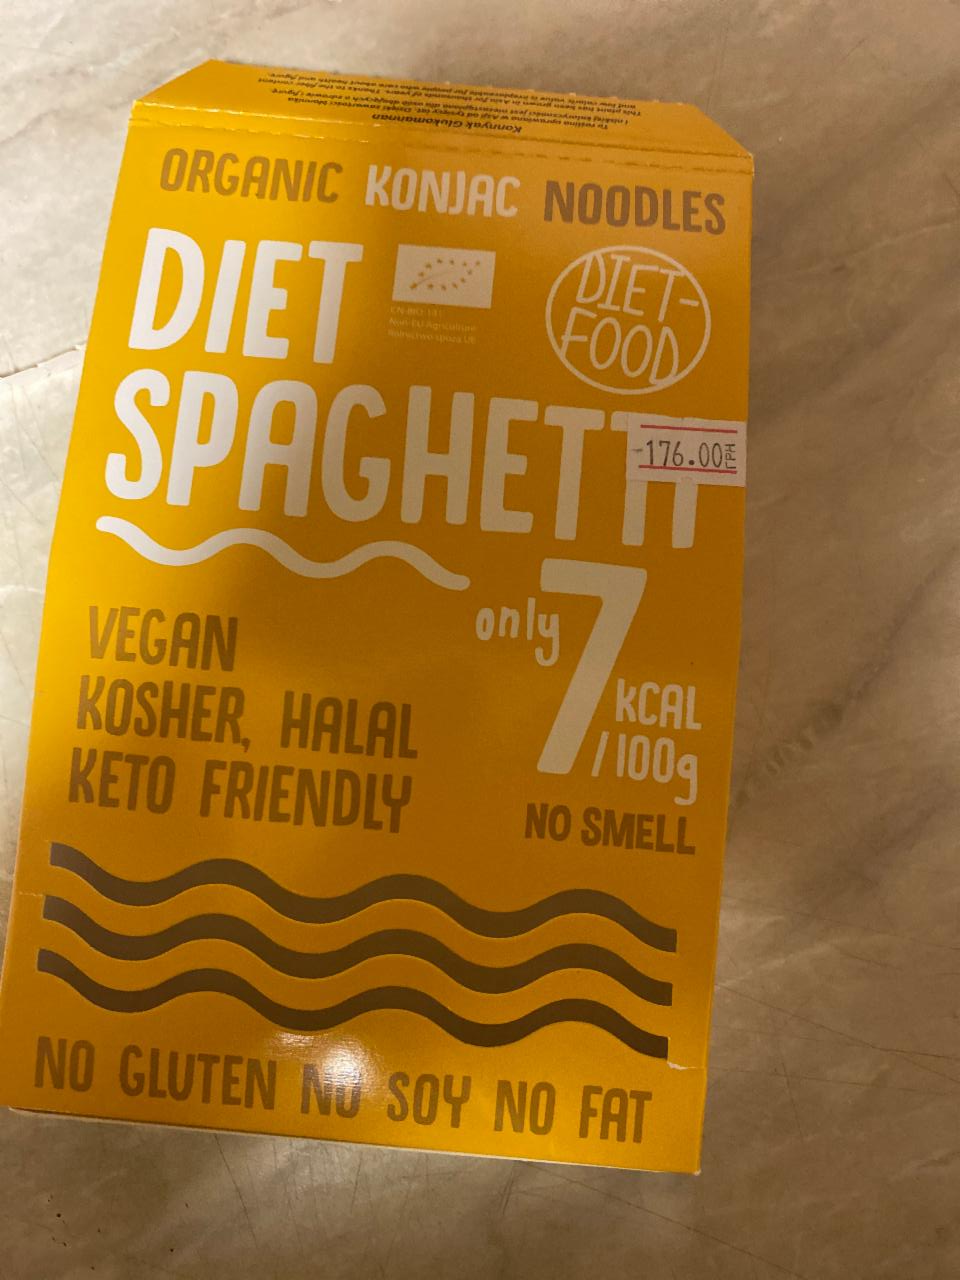 Фото - Diet spaghetti 7 kcal Diet-Food